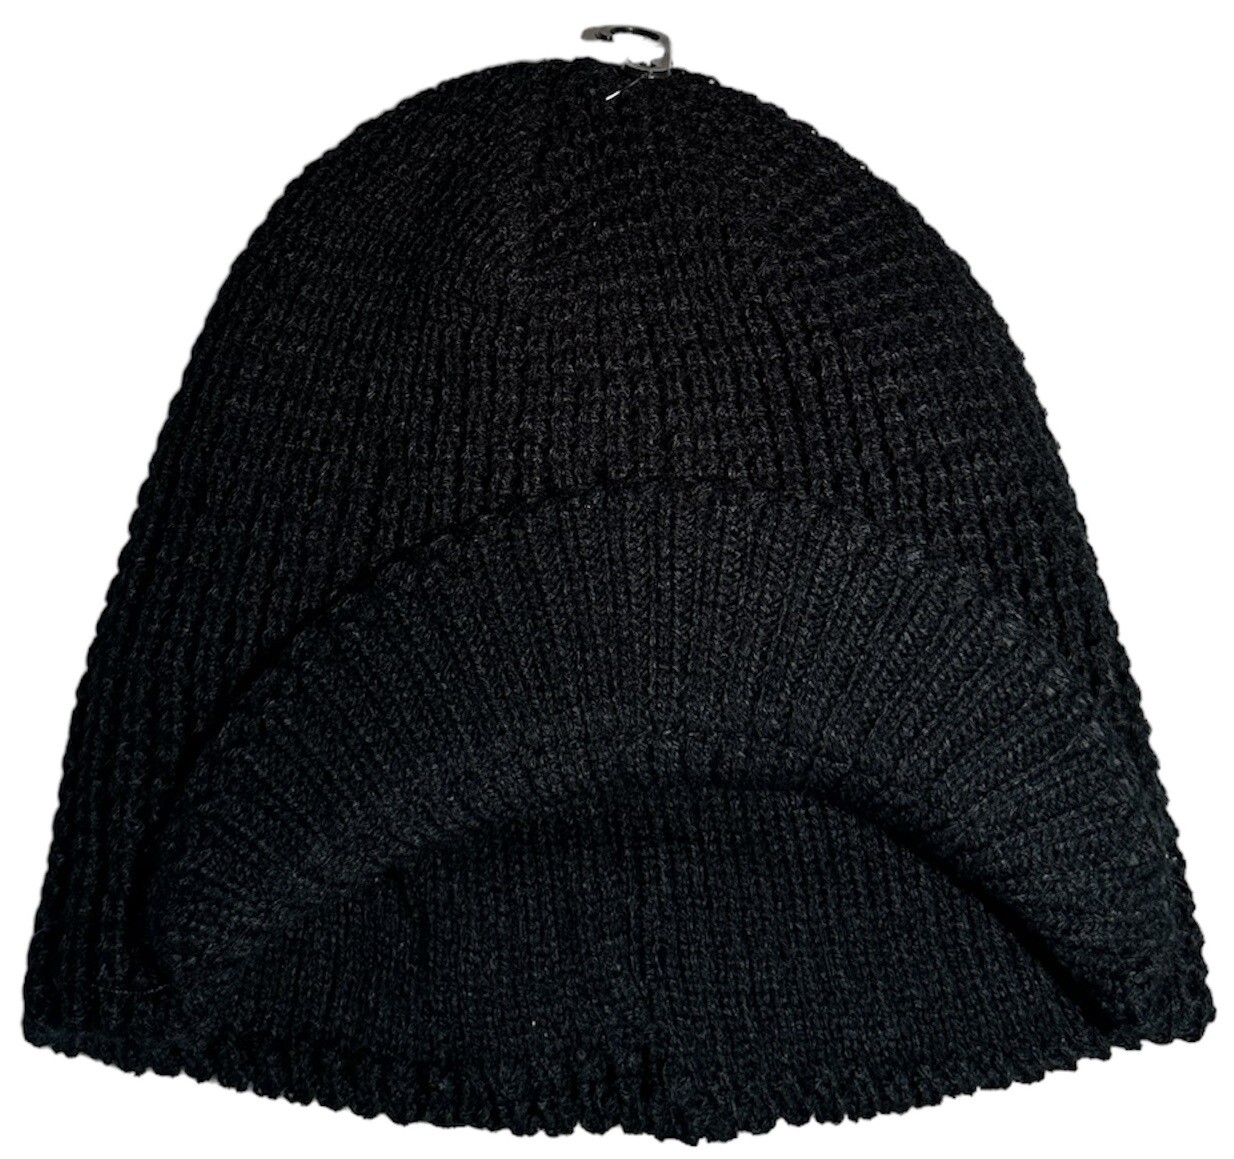 H3723 BMI EXTRA PREMIUM BEANIES Radar Knit Hat